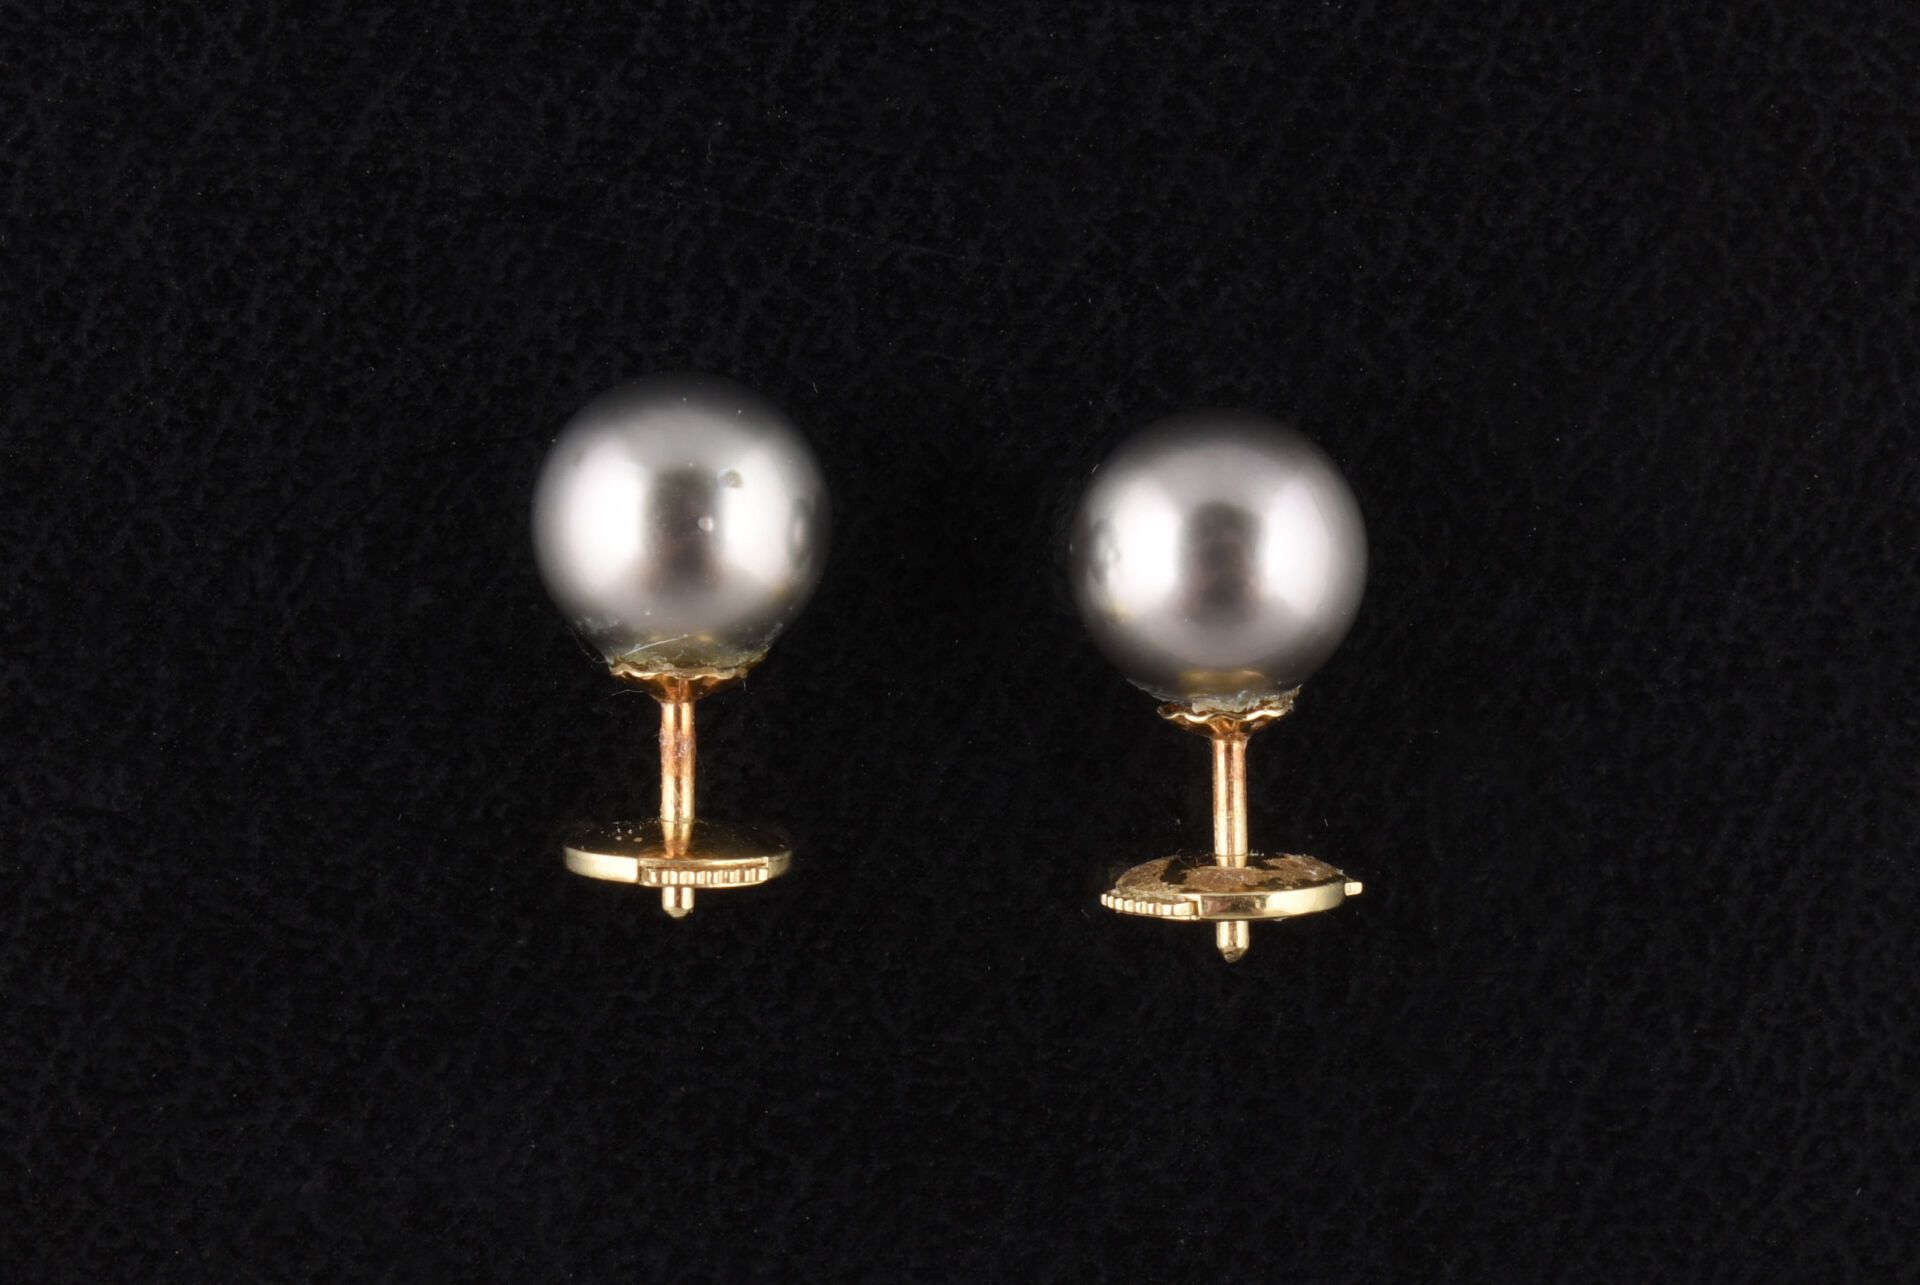 Null 一对黄金耳钉，镶嵌一颗灰色养殖珍珠。
珍珠直径：8 毫米
毛重：2.1 克